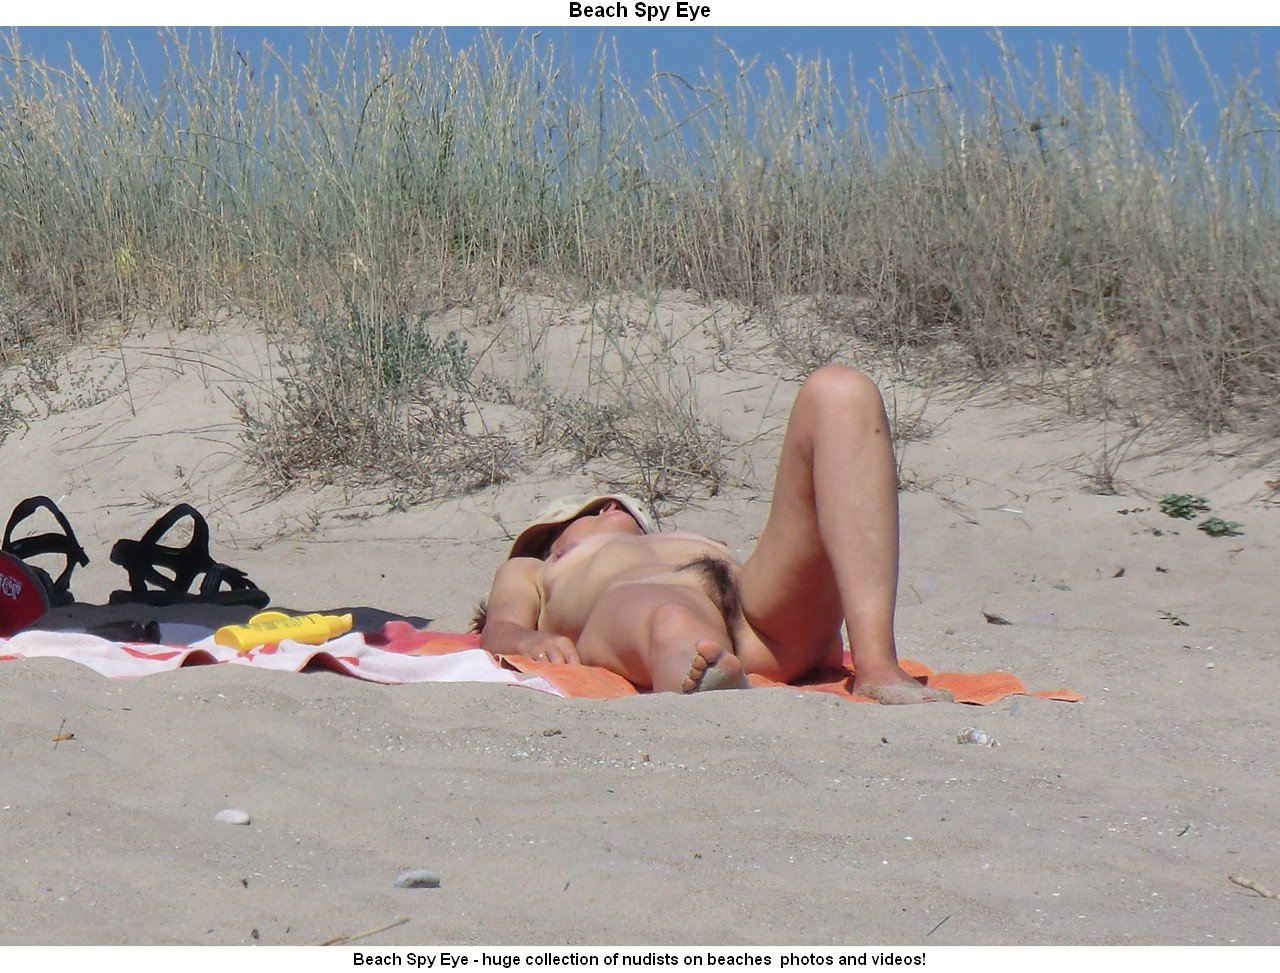 Nude Beaches Pics Nudist beach photos - obscene women nudists.. Image 3